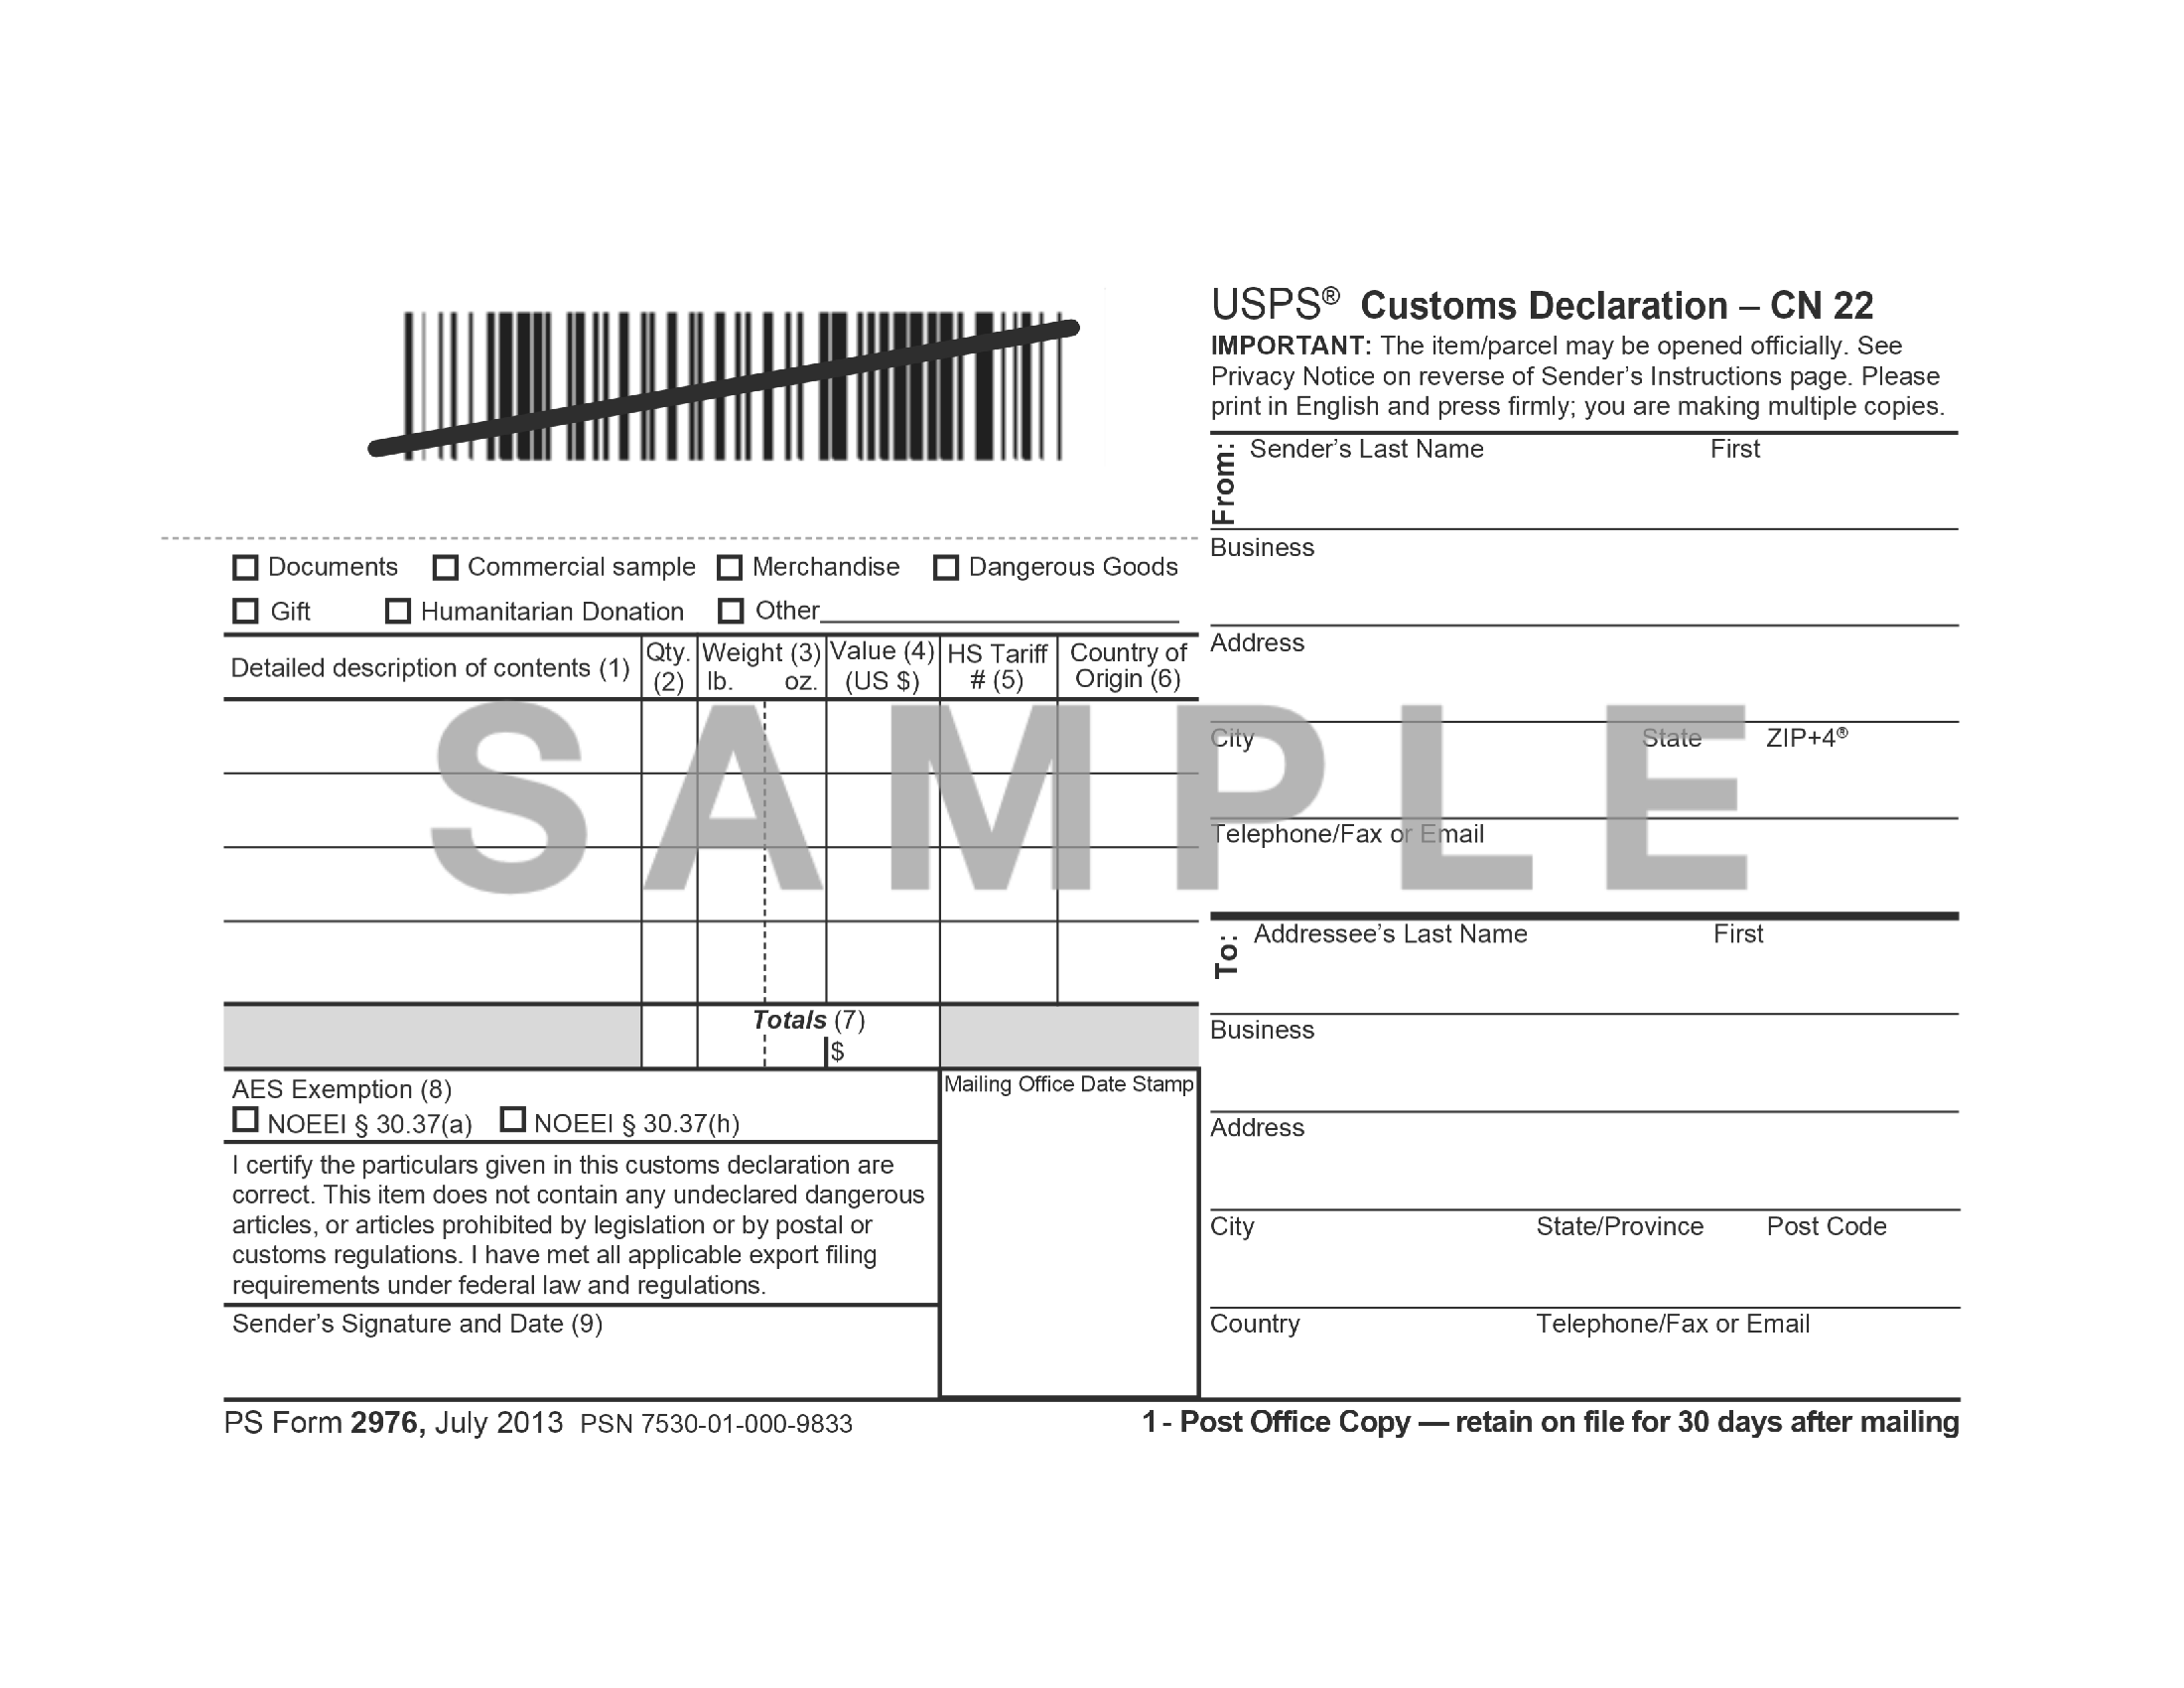 ps-form-2976-customs-declaration-cn-22-forms-docs-2023